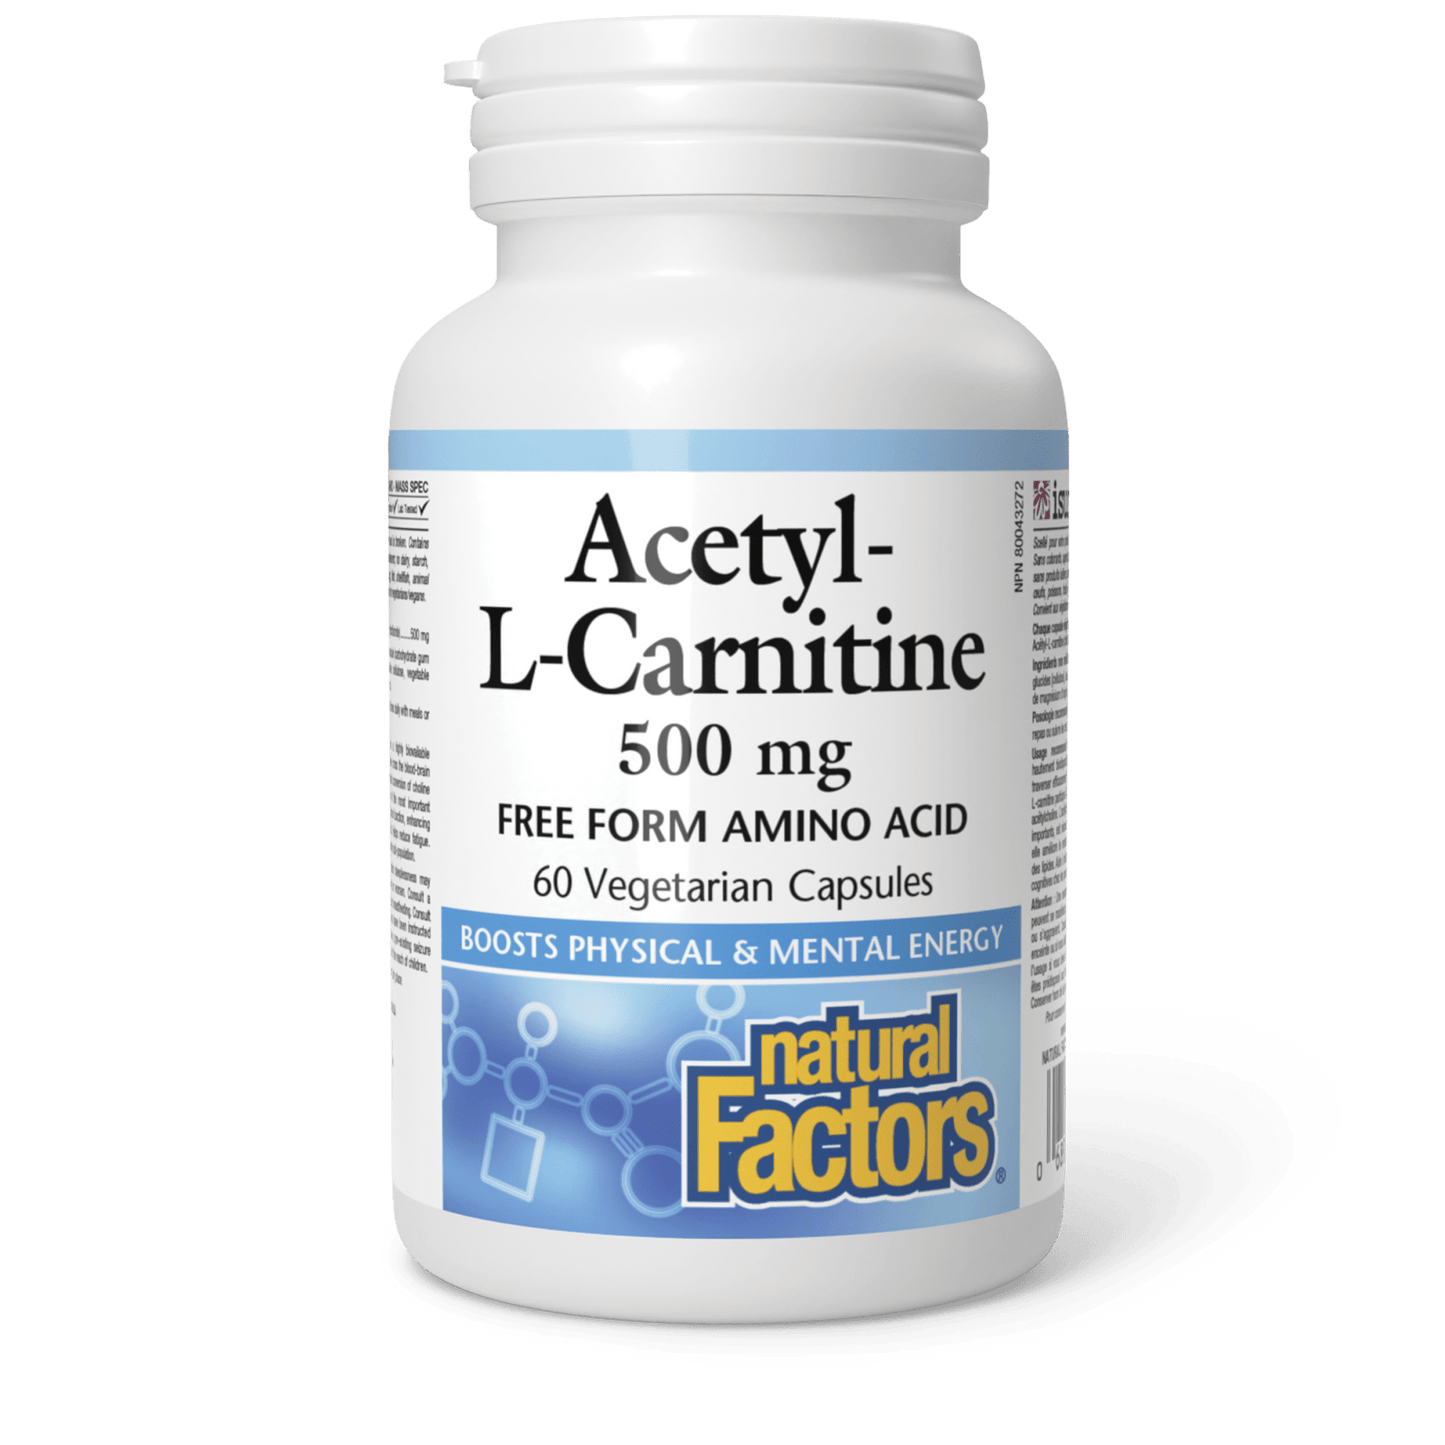 Acetyl-L-Carnitine 500 mg for Natural Factors |variant|hi-res|2800